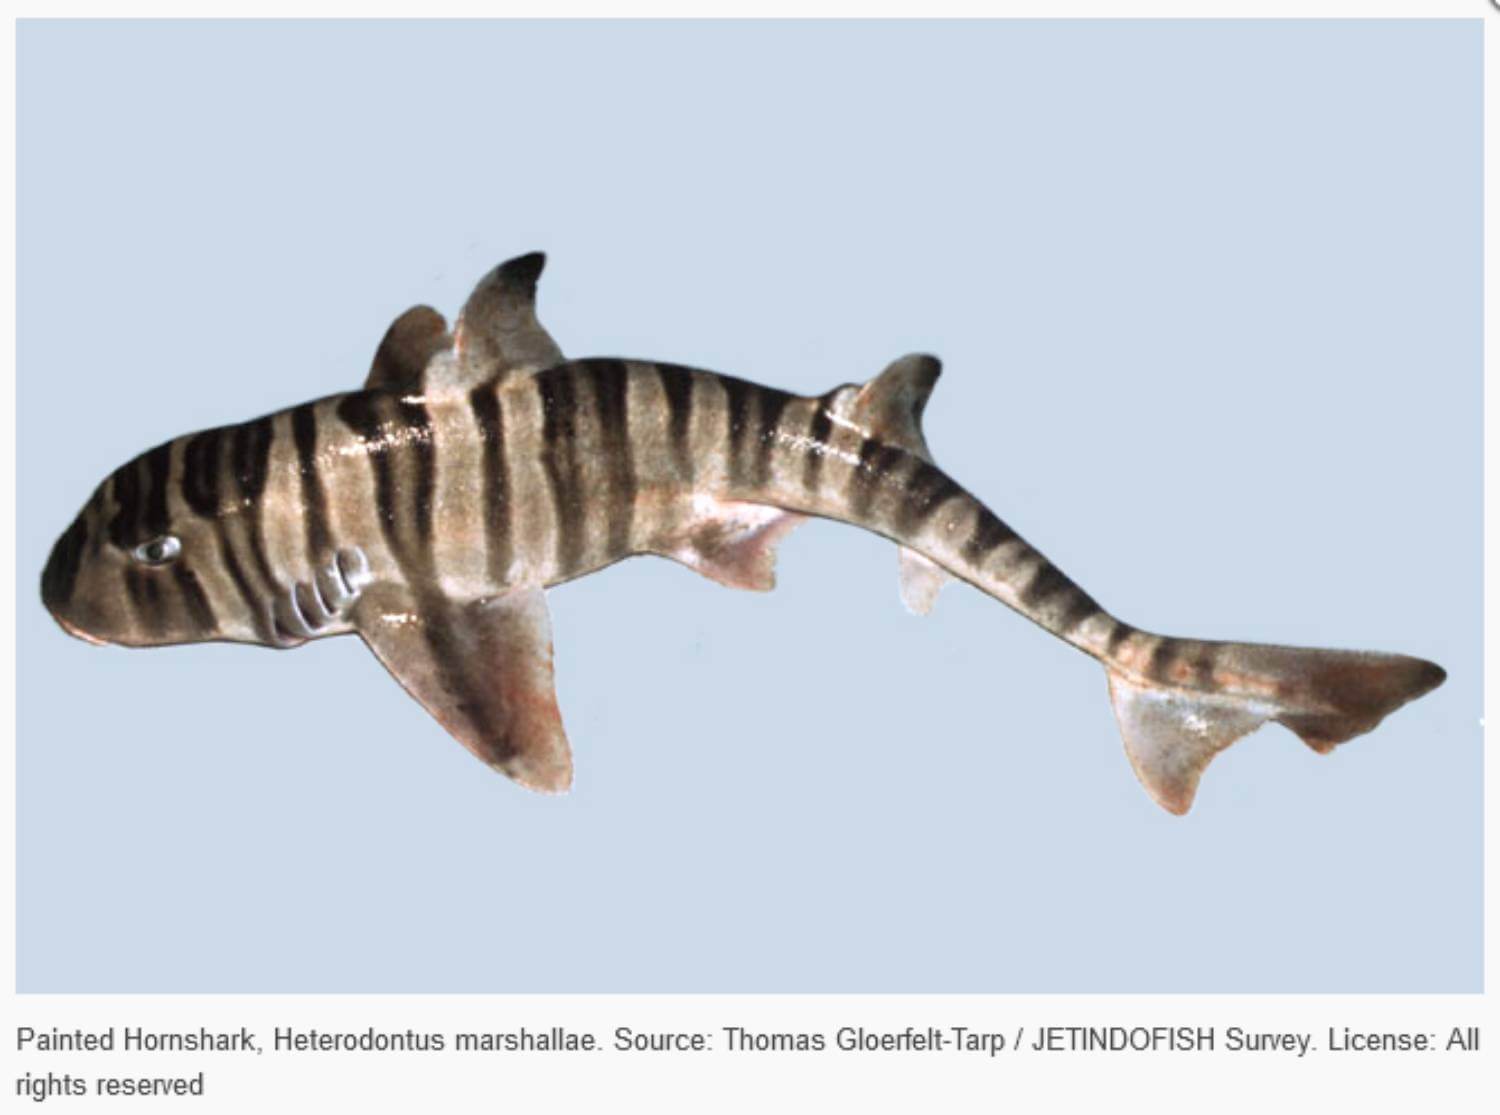 Heterodontus marshallae - requin dents molaires 12